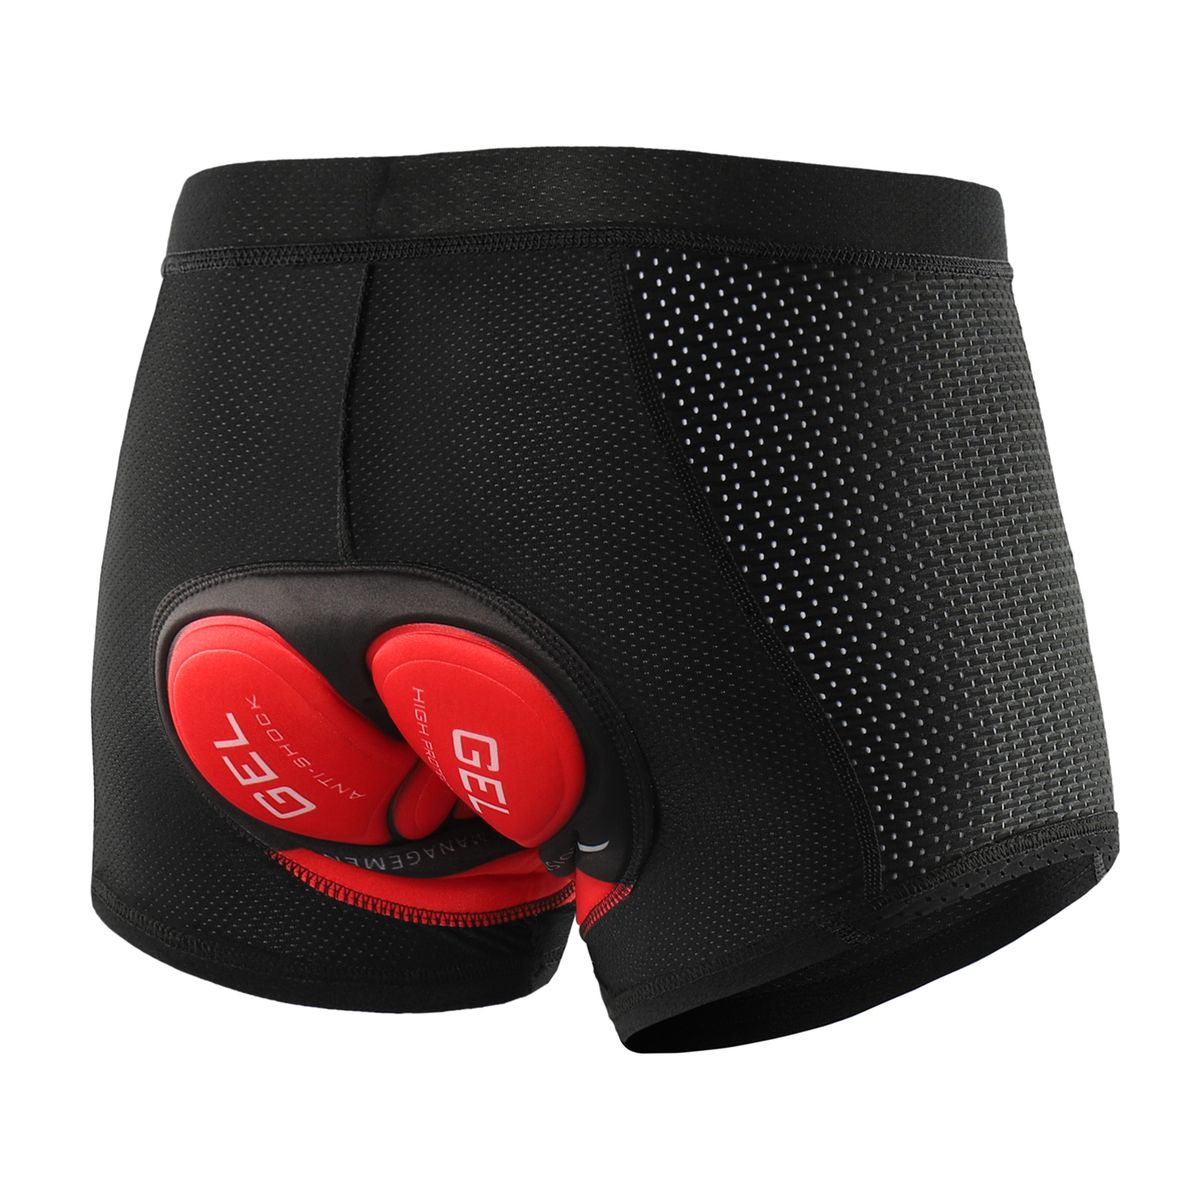 Men's Bike Cycling Underwear Shorts 3D QA Gel Padded | Shop Today. Get ...